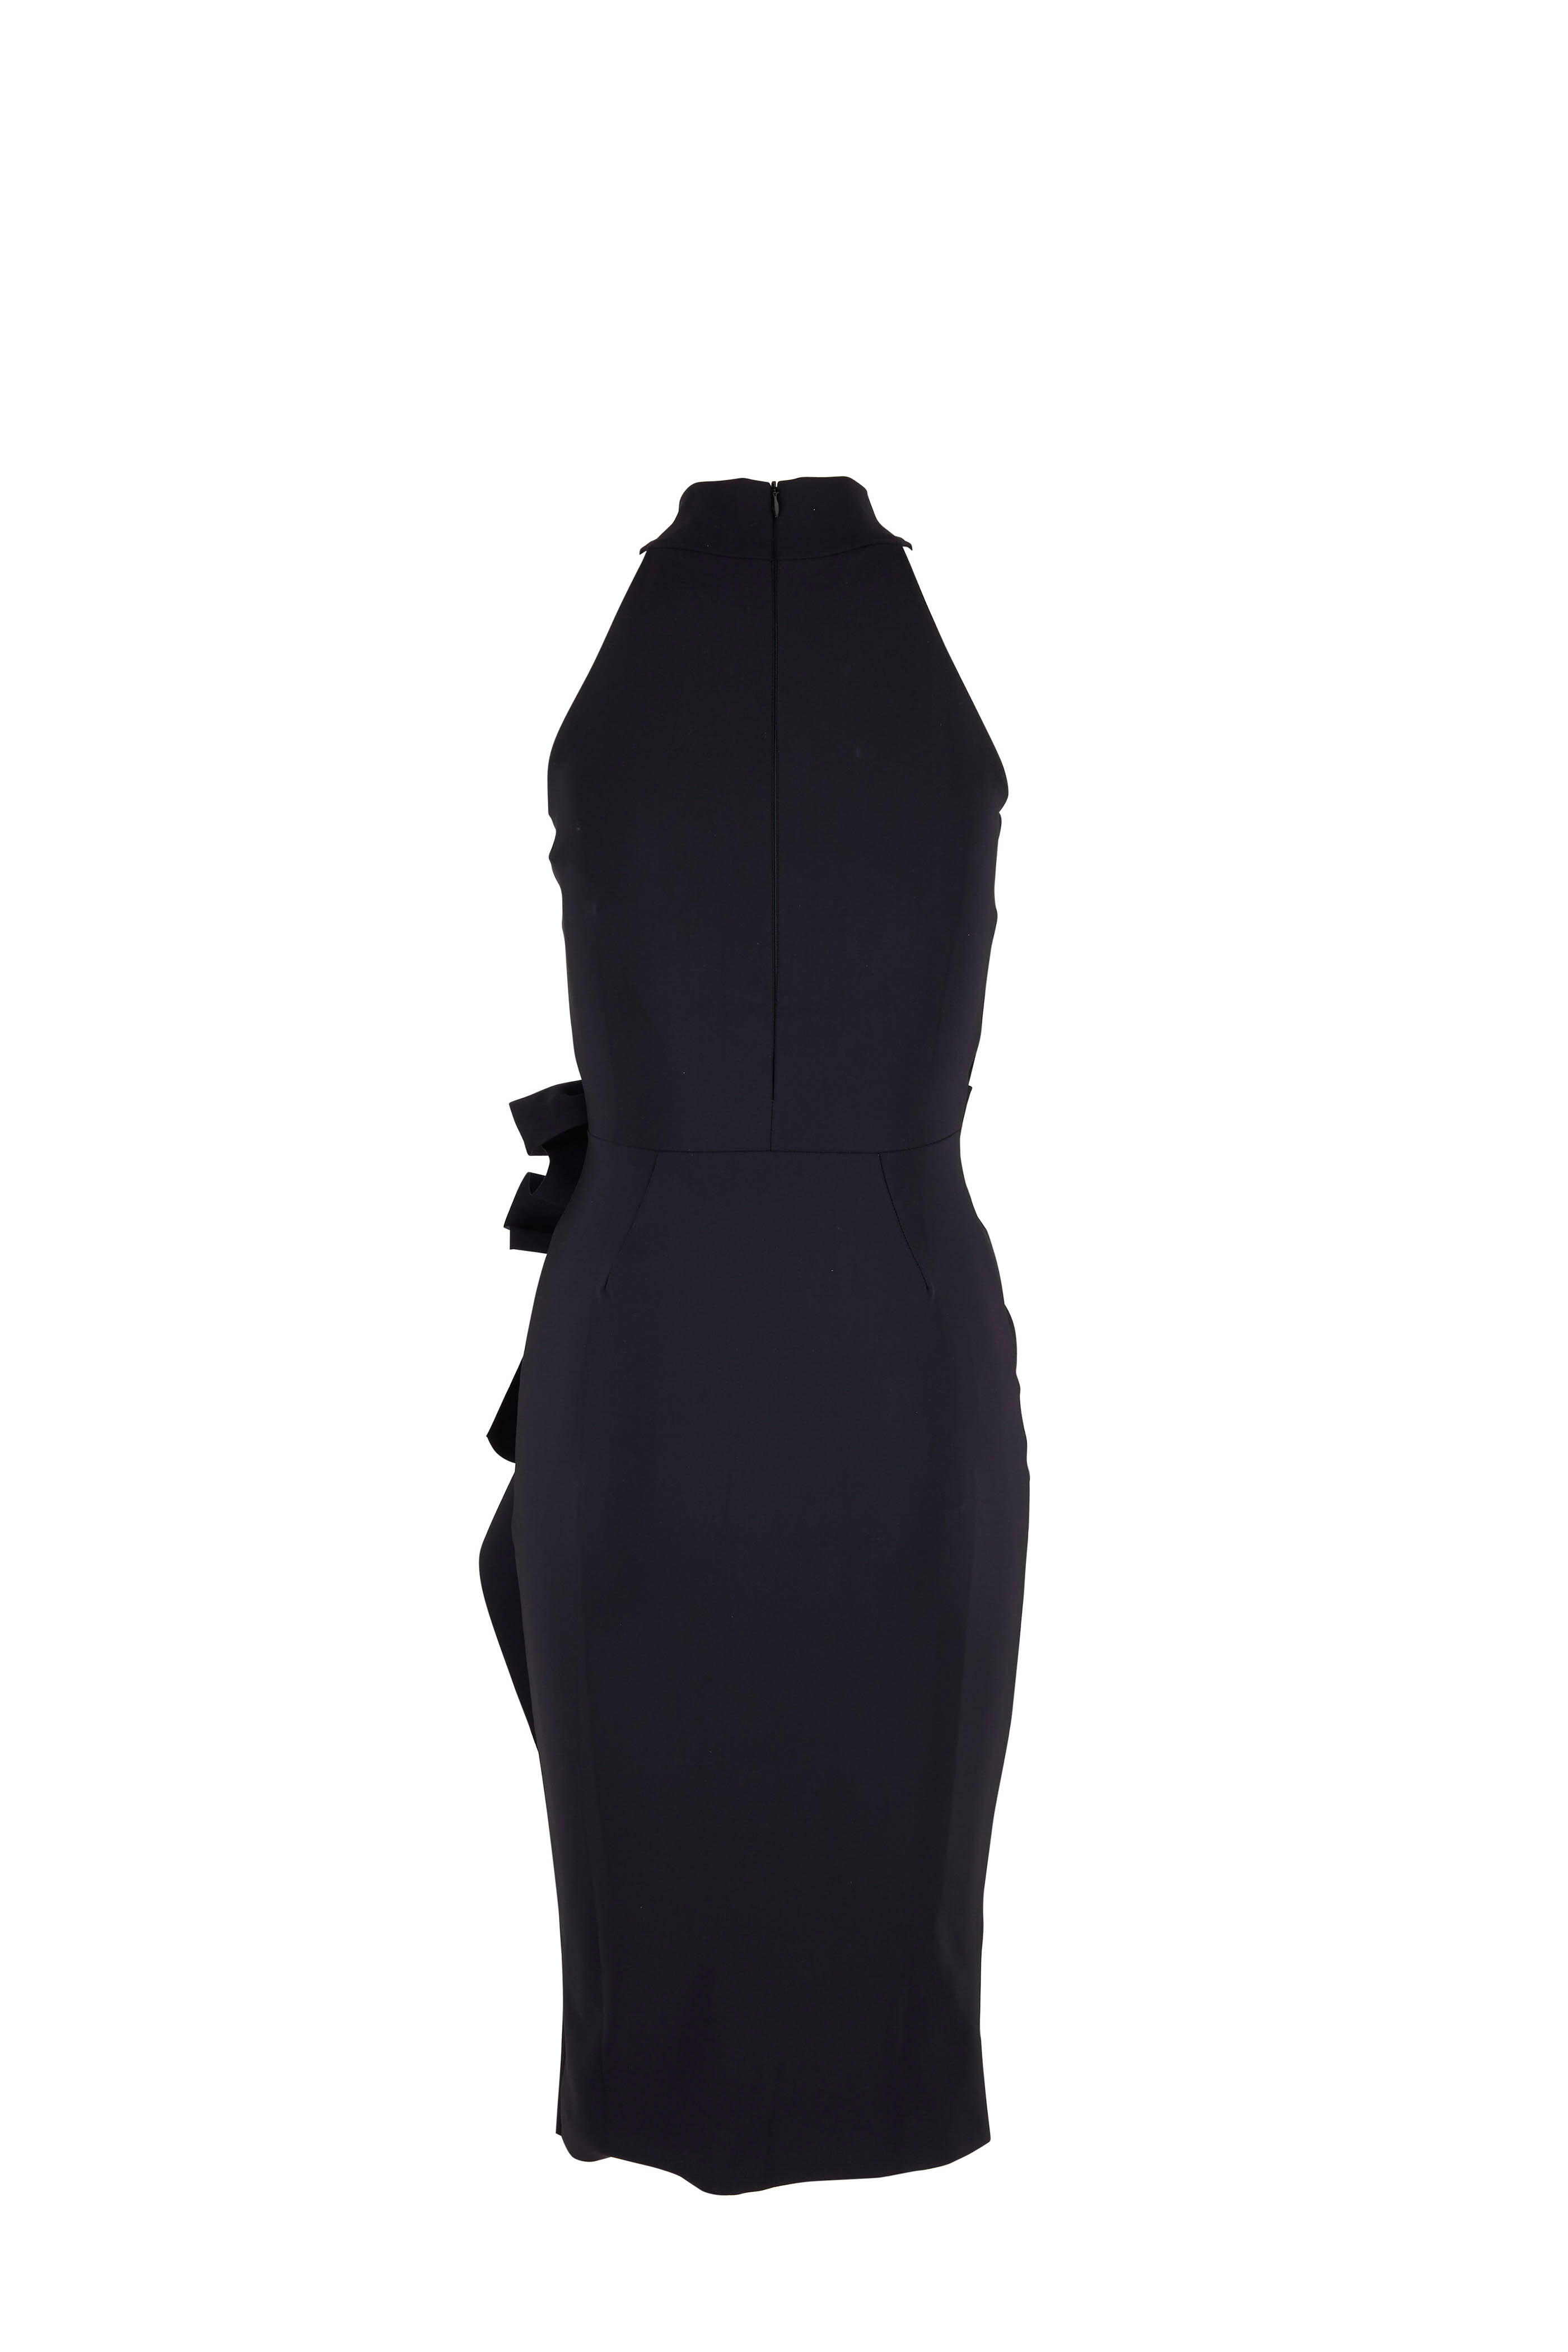 Chiara Boni La Petite Robe - Gudrum Black Sleeveless Halter Dress